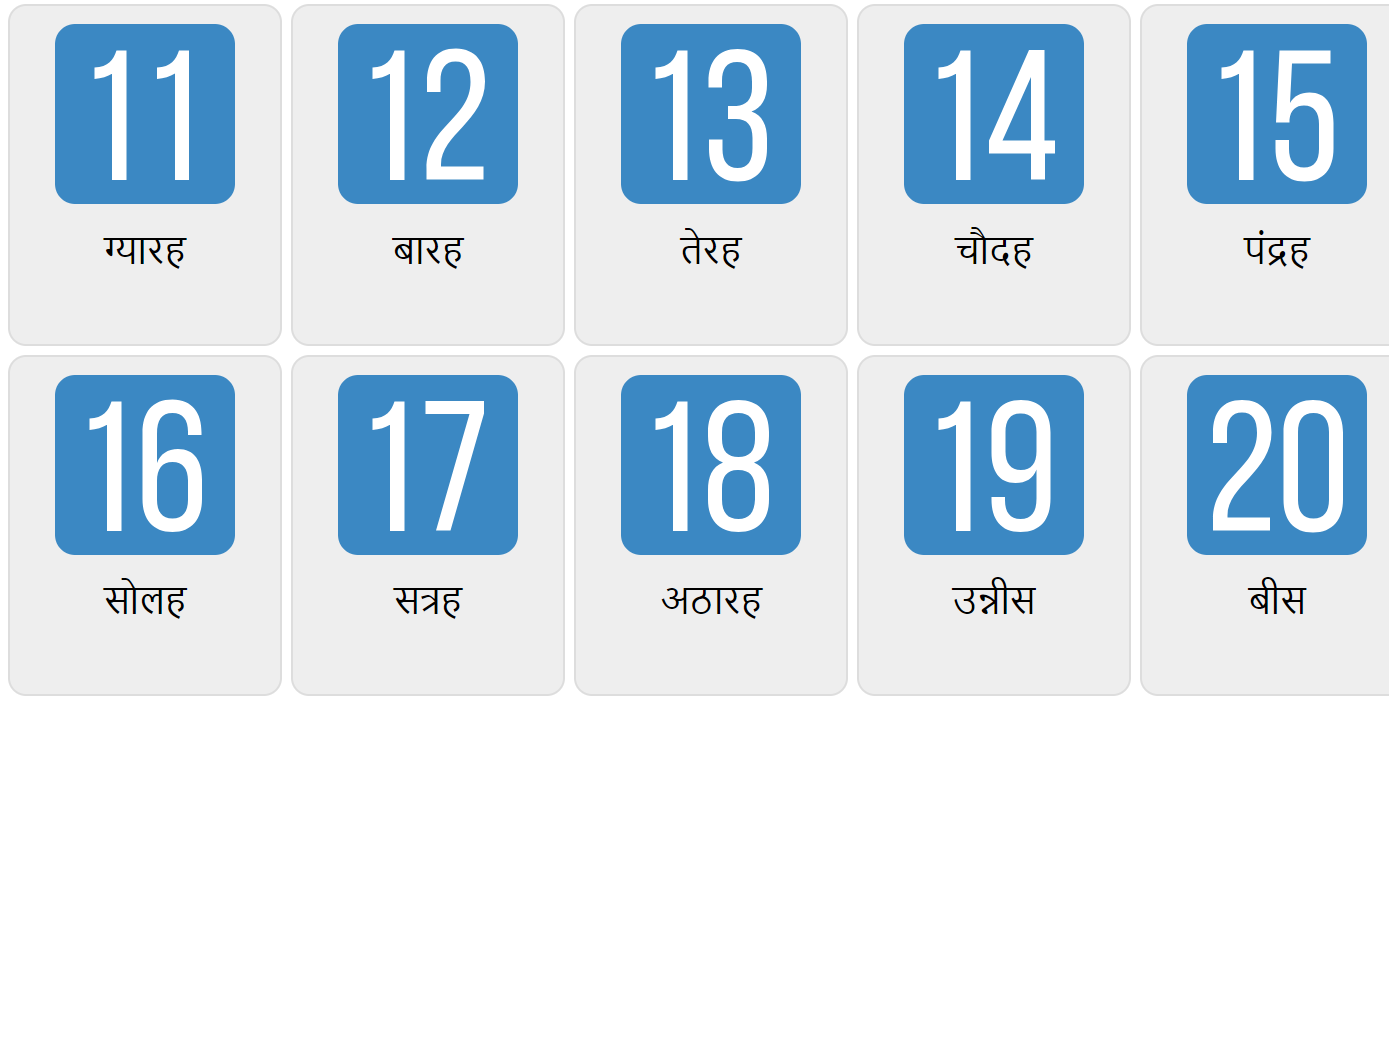 Числа 11-20 на языке хинди